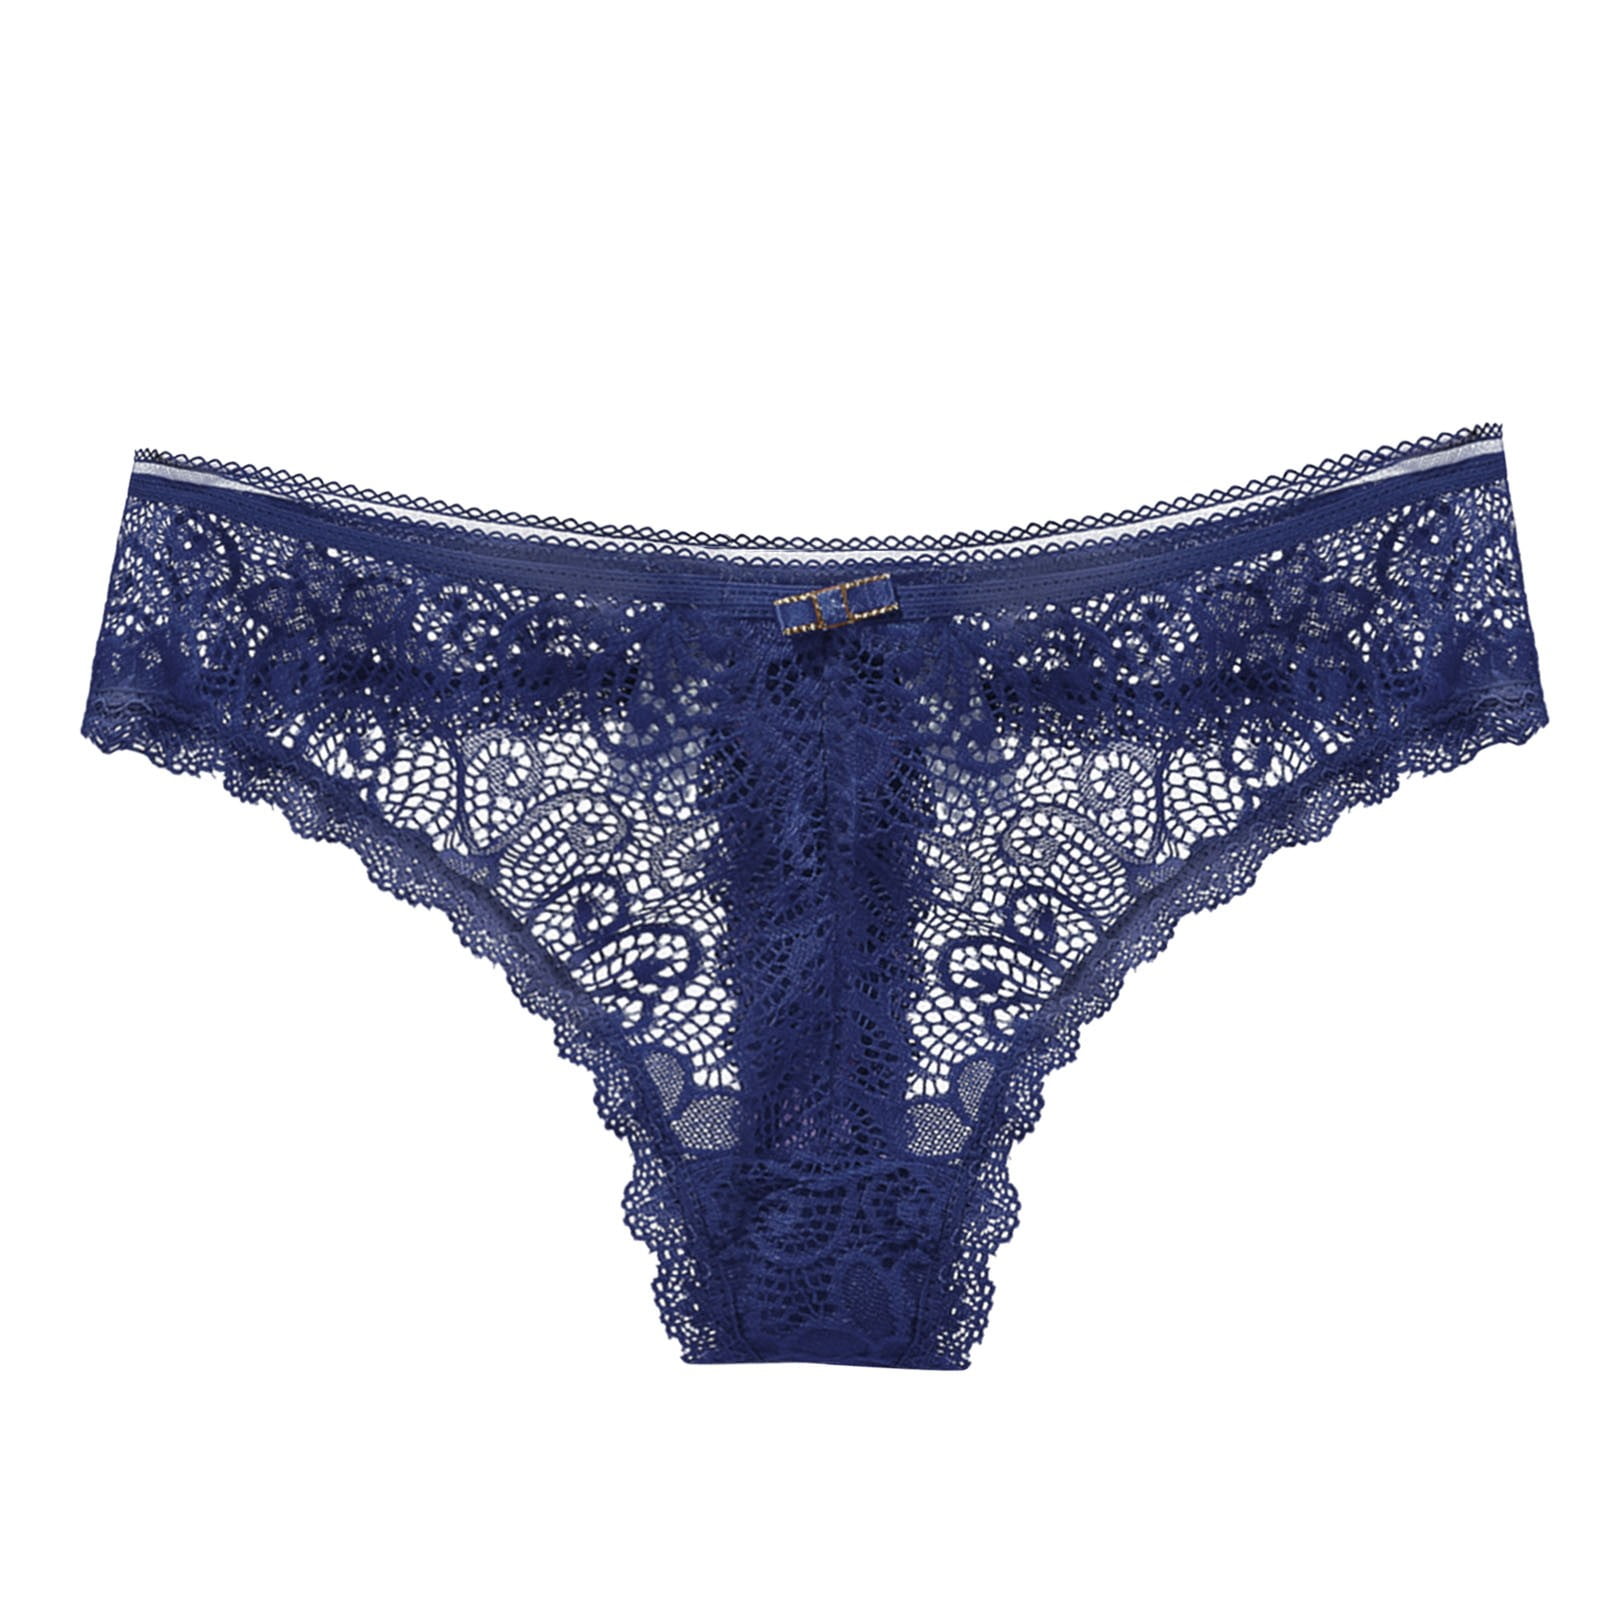 Cathalem Satin Lingerie for Women Low Open Waist Underpants Crotch Lace  Panties Women's Underwear Briefs Pin up Lingerie Set Underwear White One  Size 